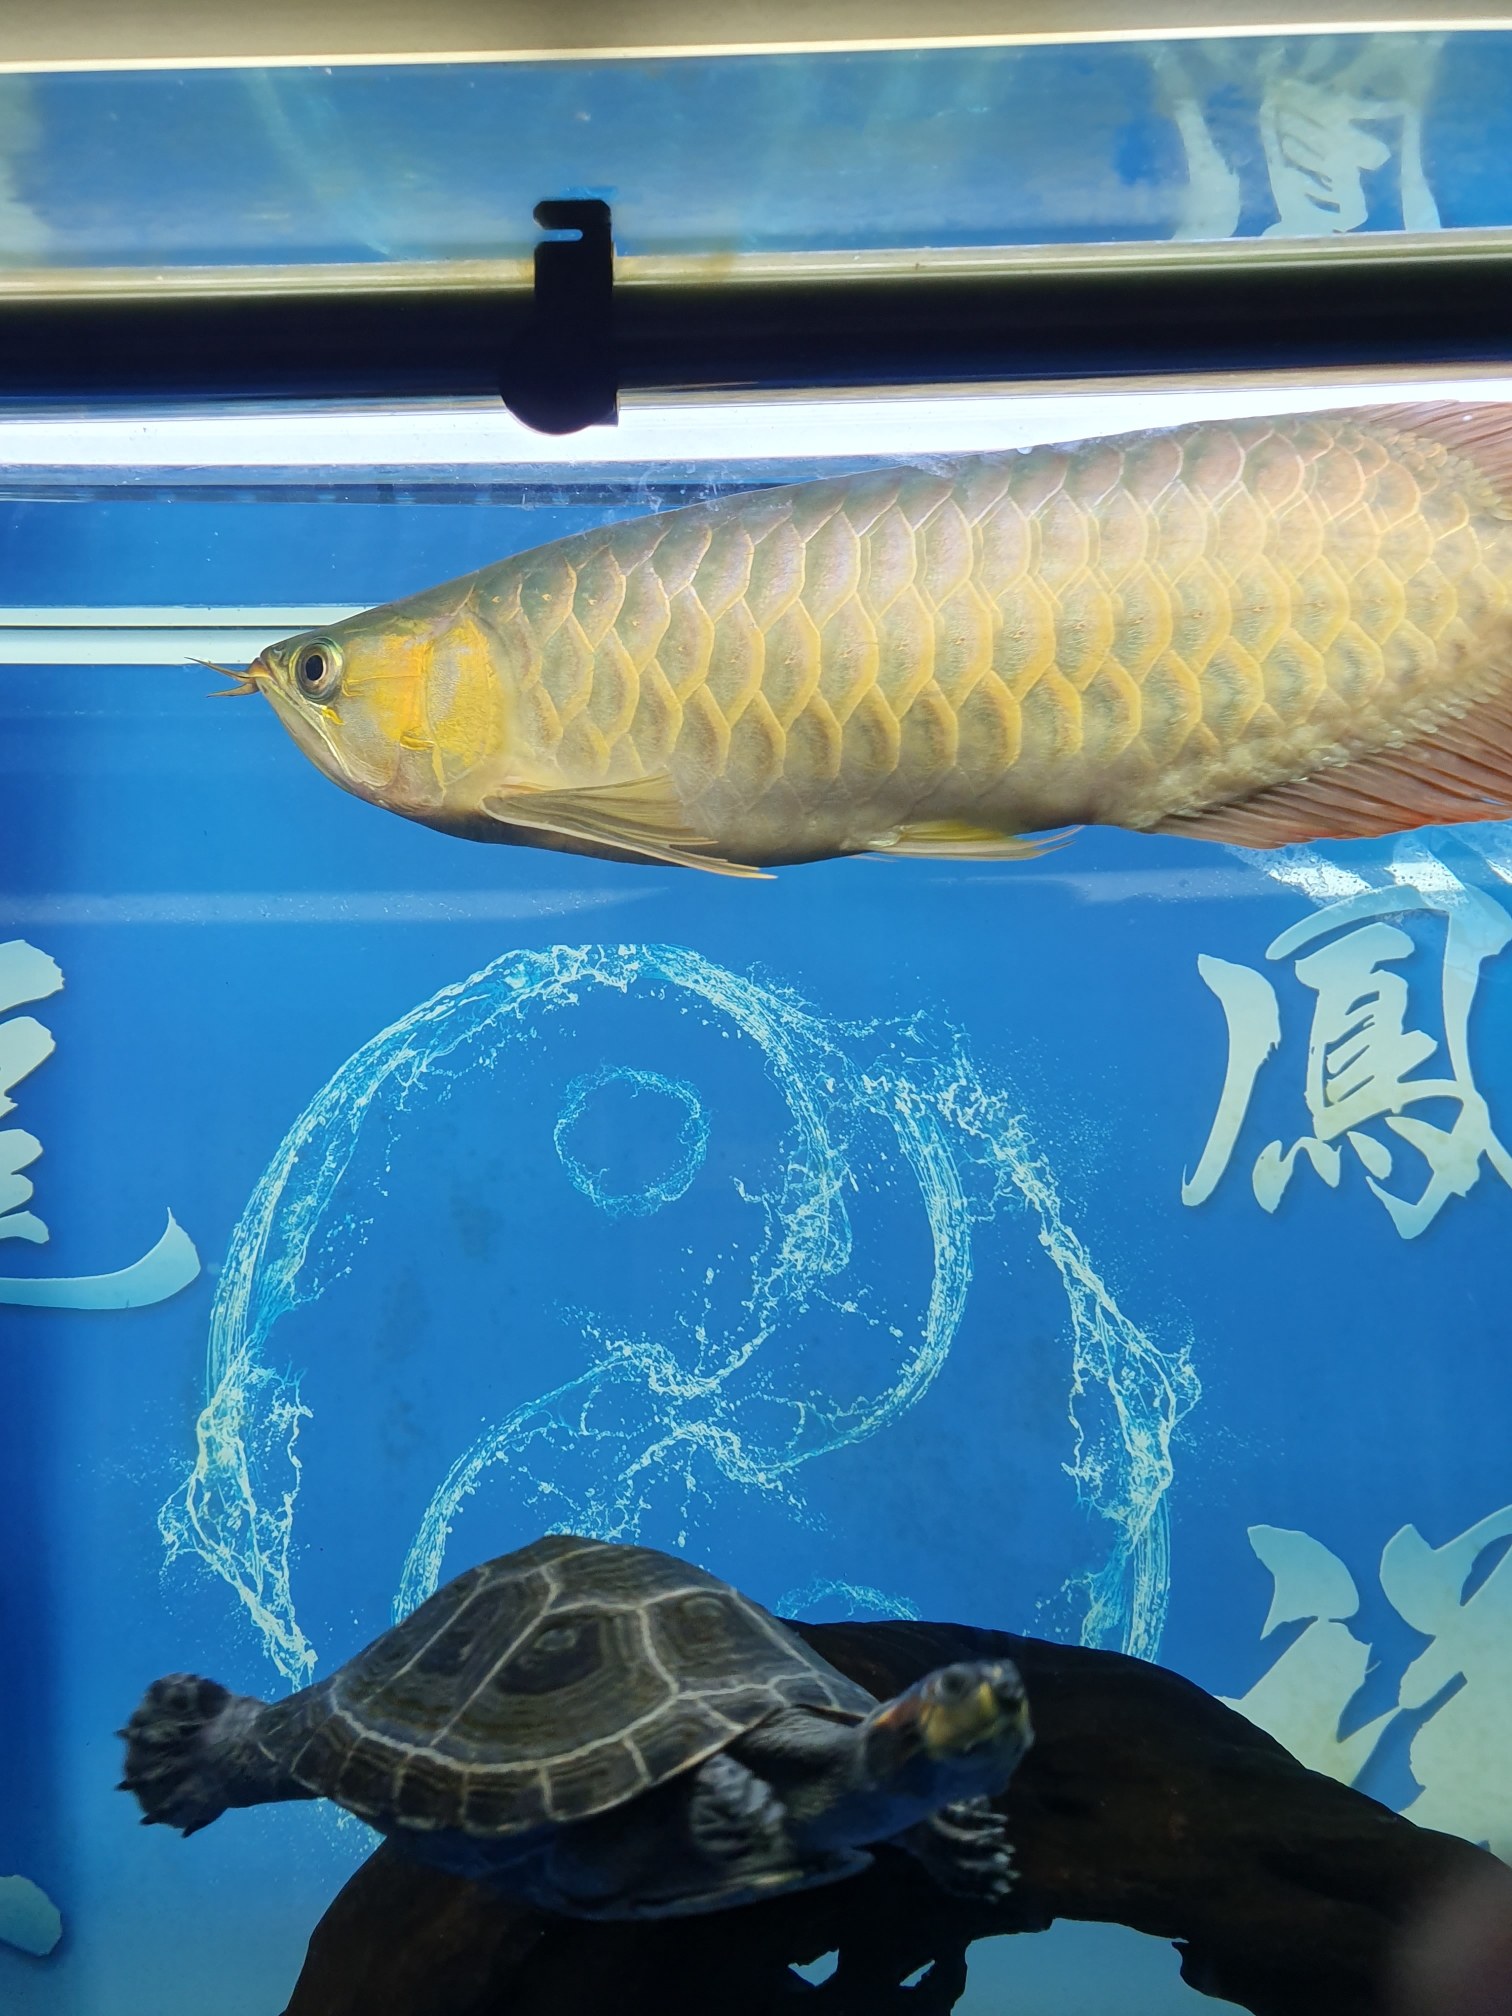 September - Chongyang climbing polyculture fish a year and a half of study leave Siam giant carp (national treasure) ASIAN AROWANA,AROWANA,STINGRAY The5sheet